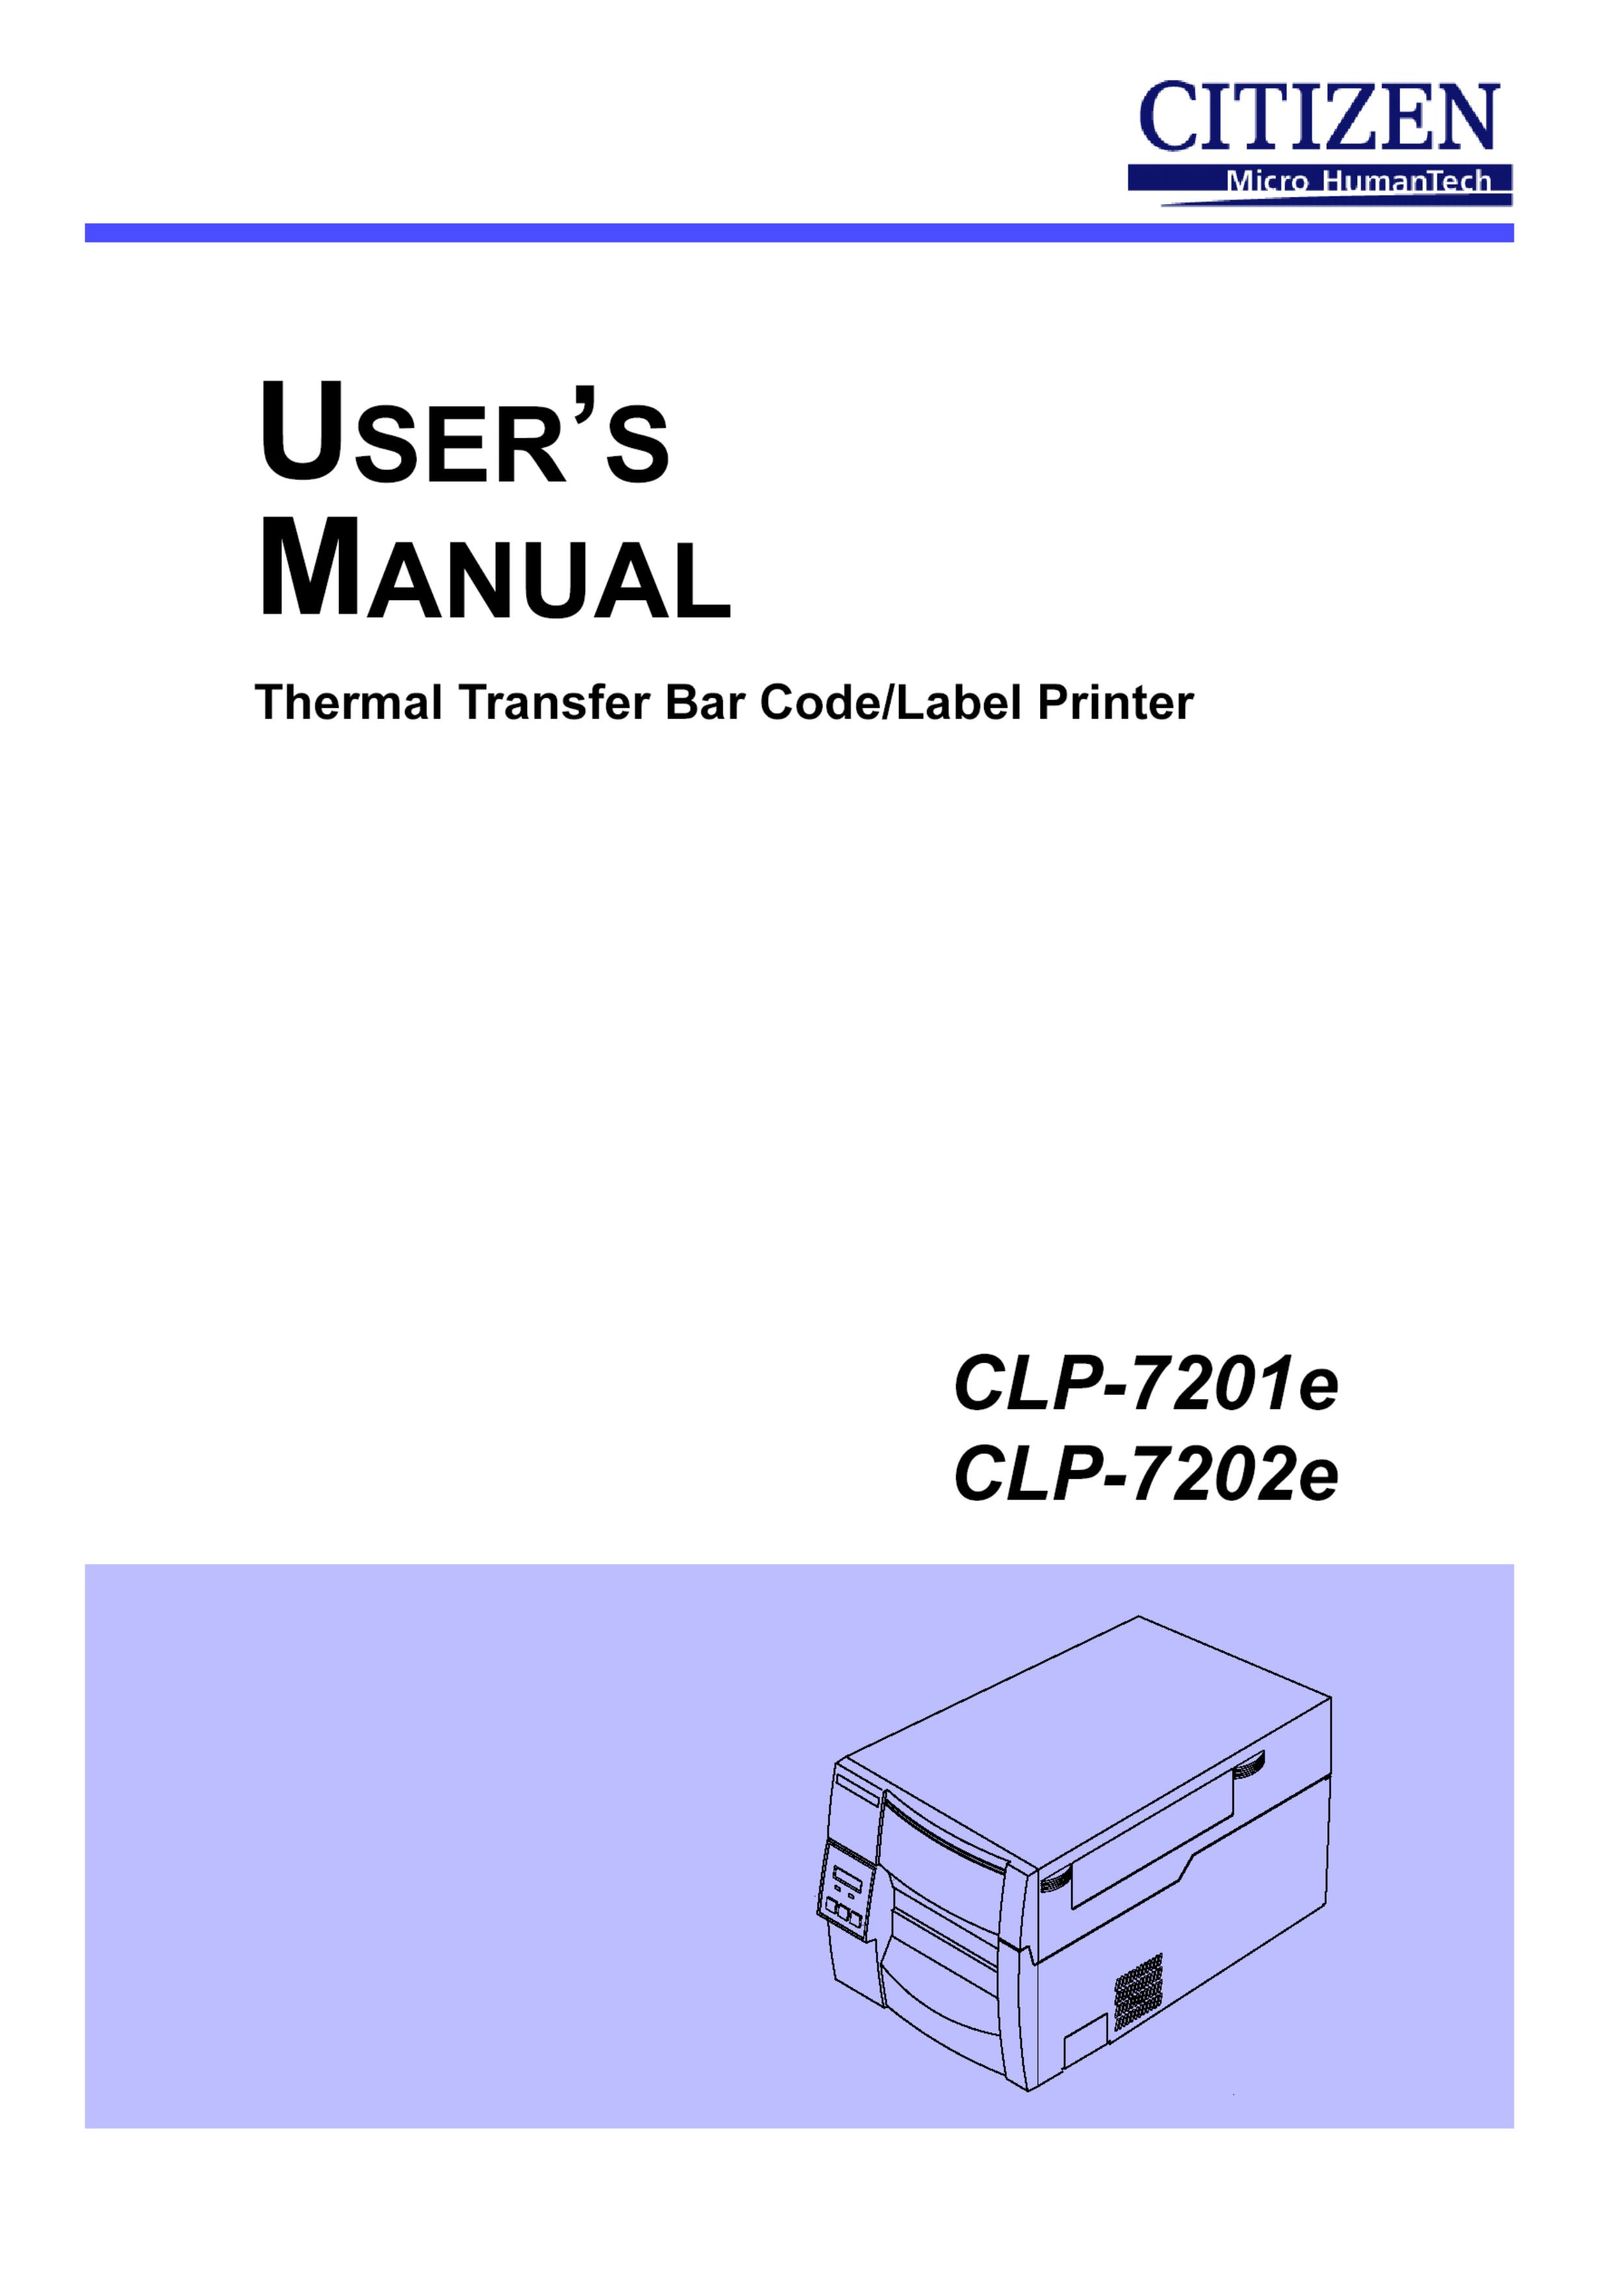 Citizen CLP-7202e Label Maker User Manual